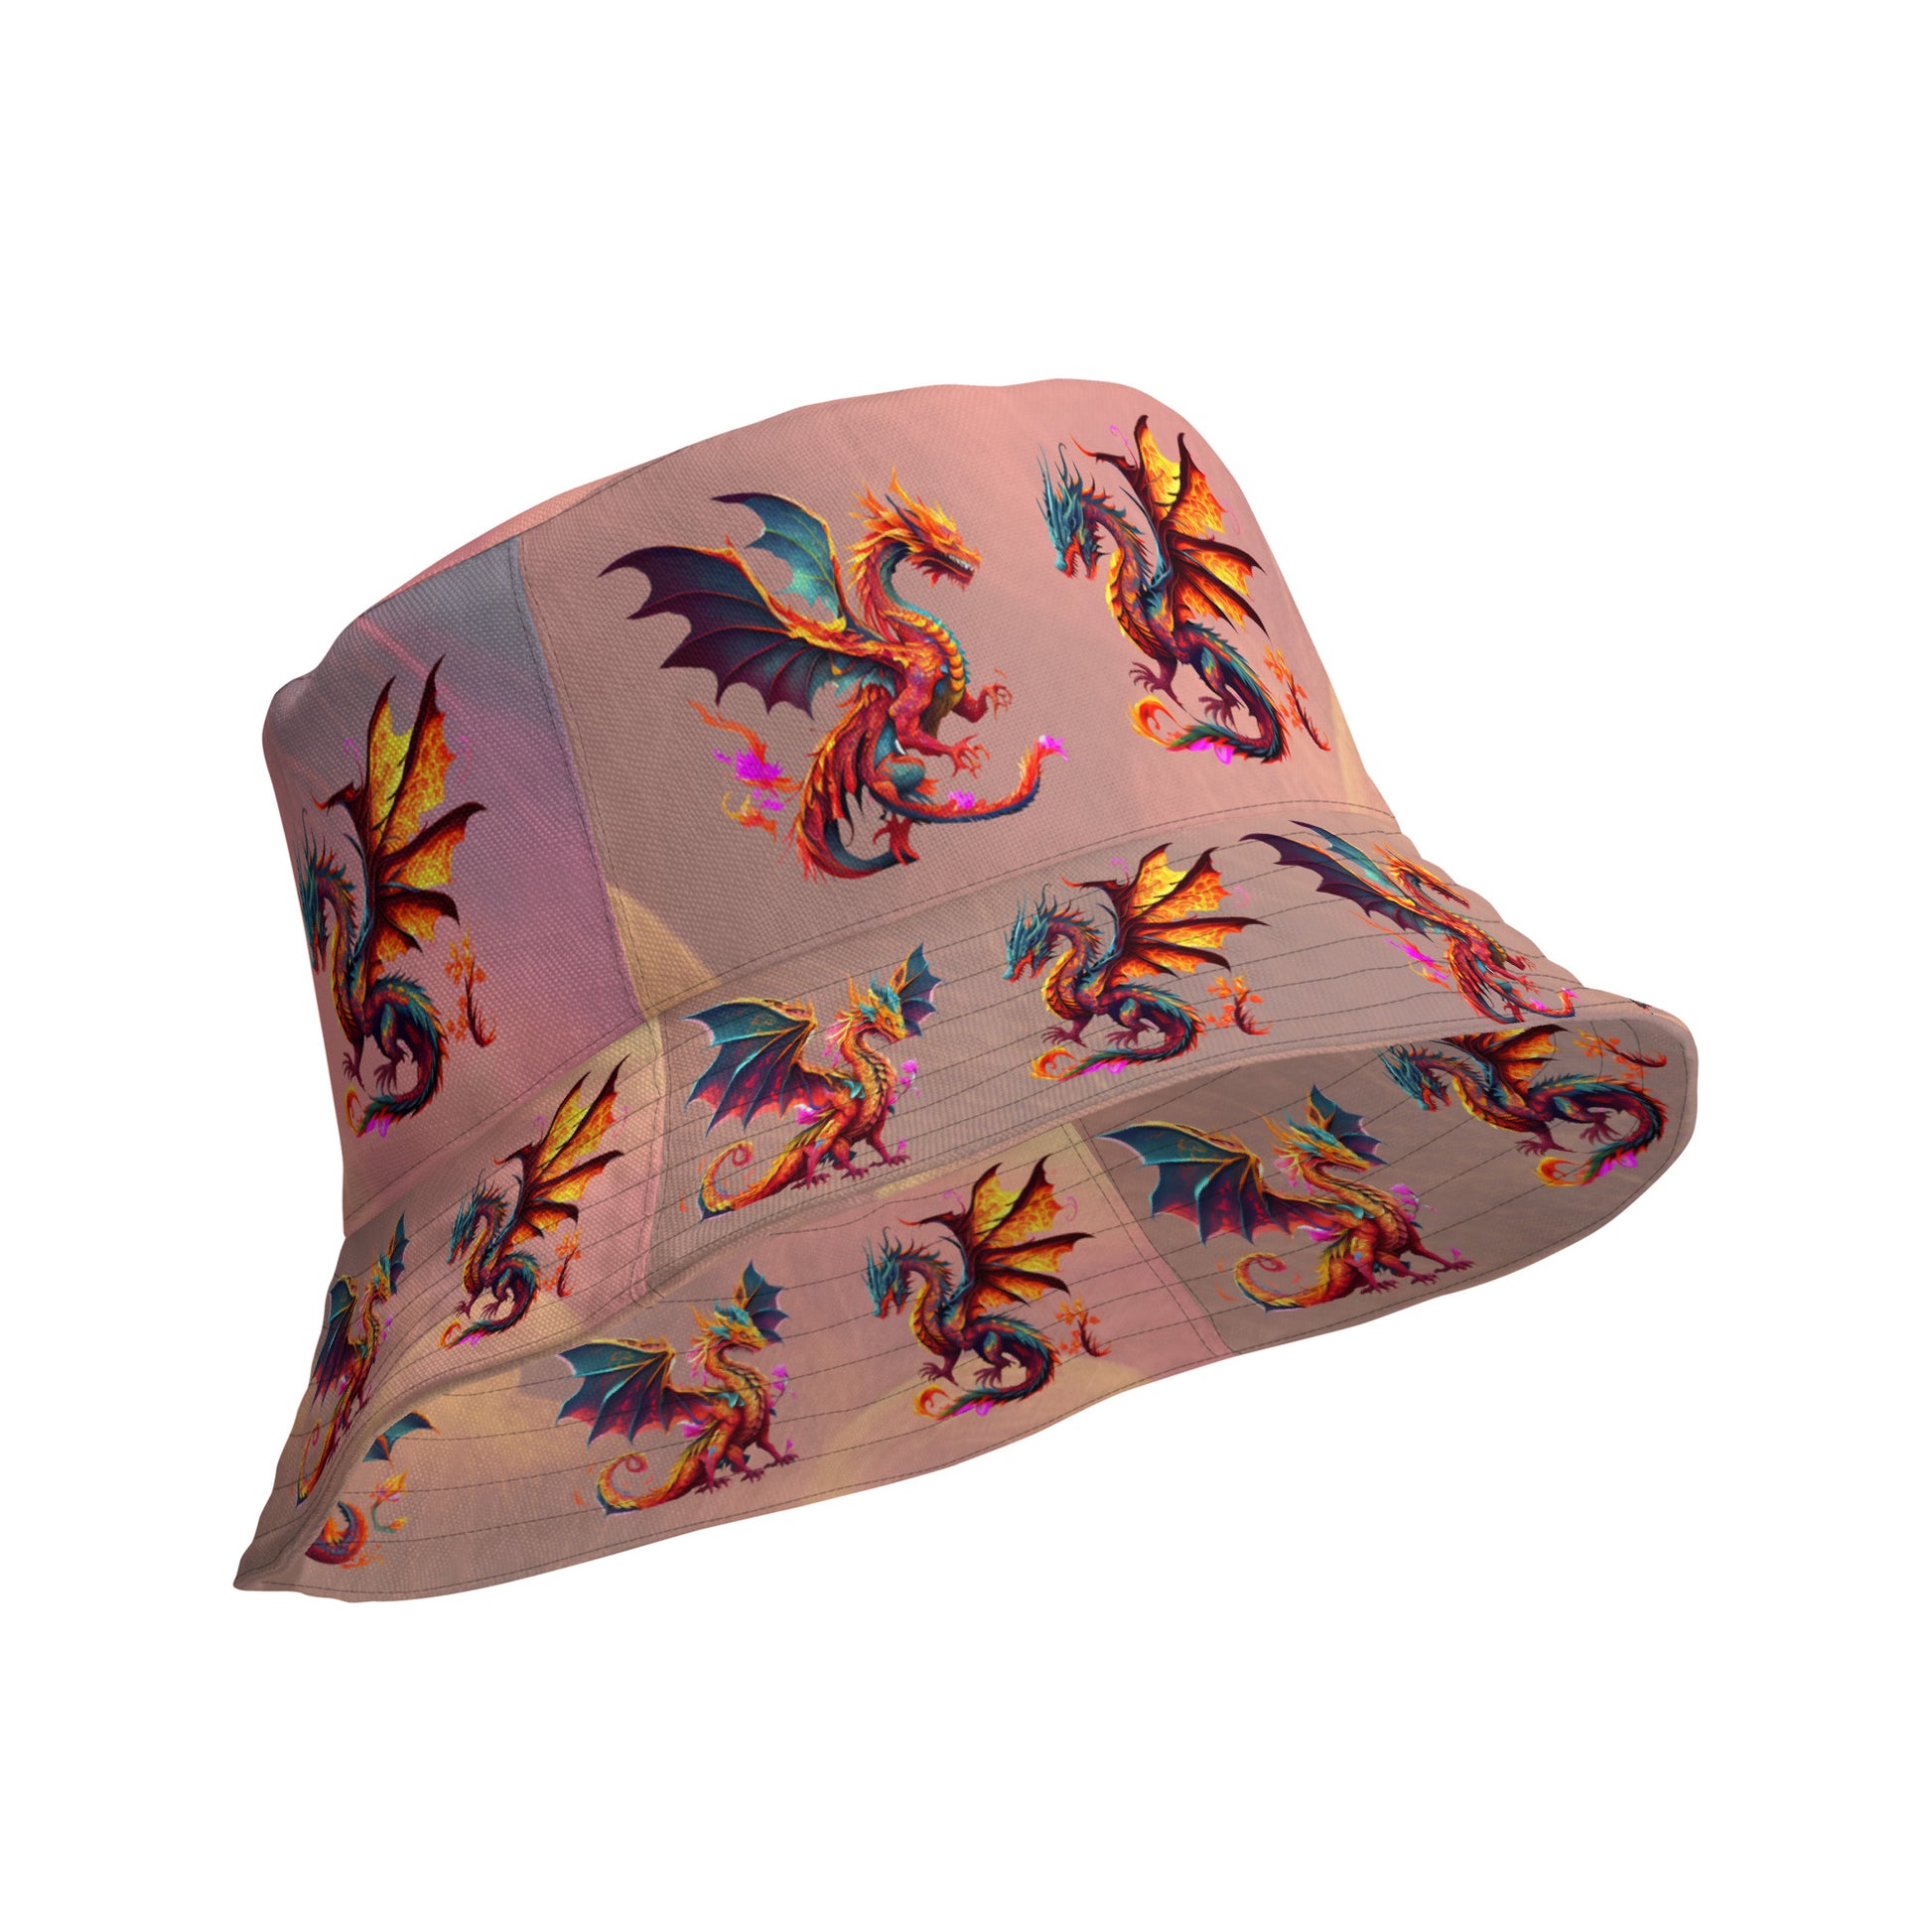 Fire Dragon Reversible bucket hat